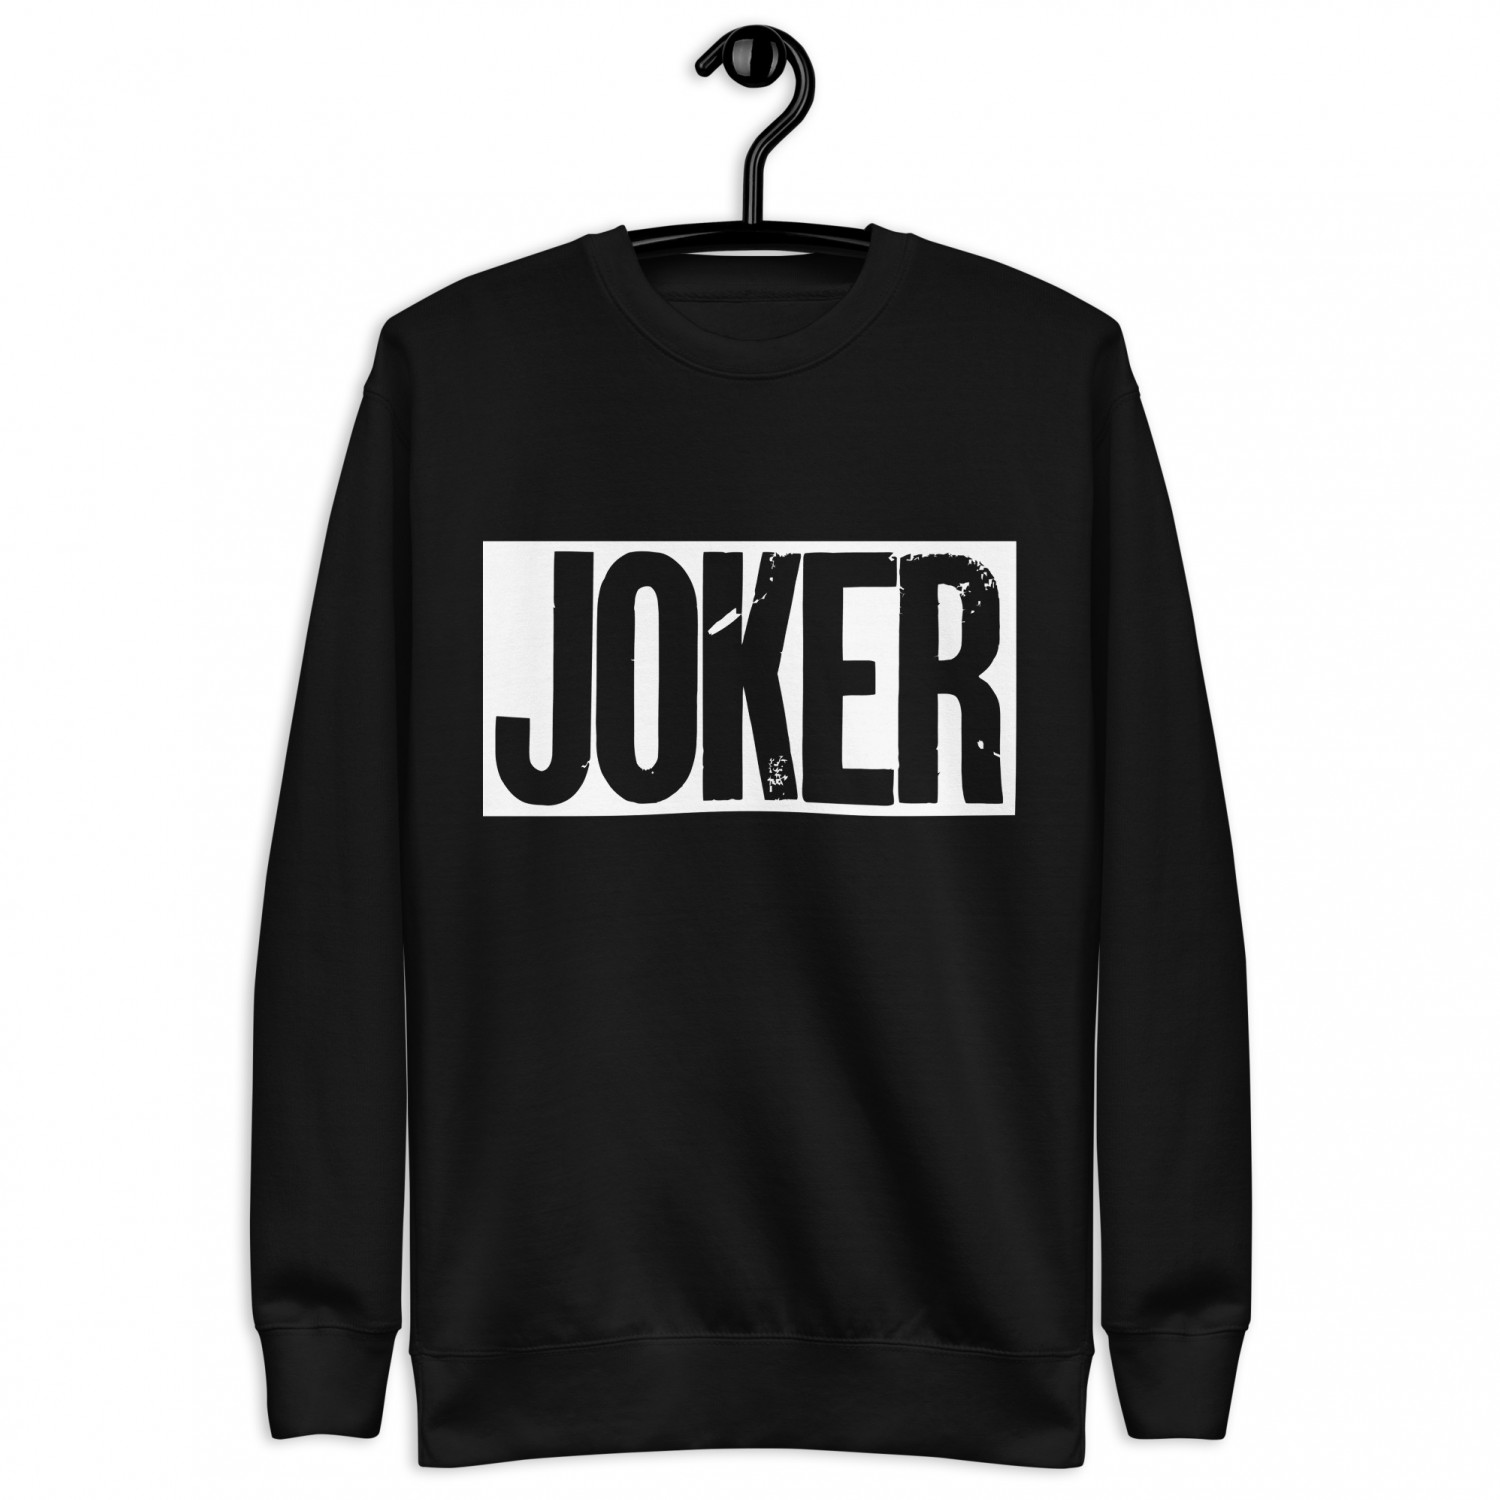 Buy a warm sweatshirt with Joker print